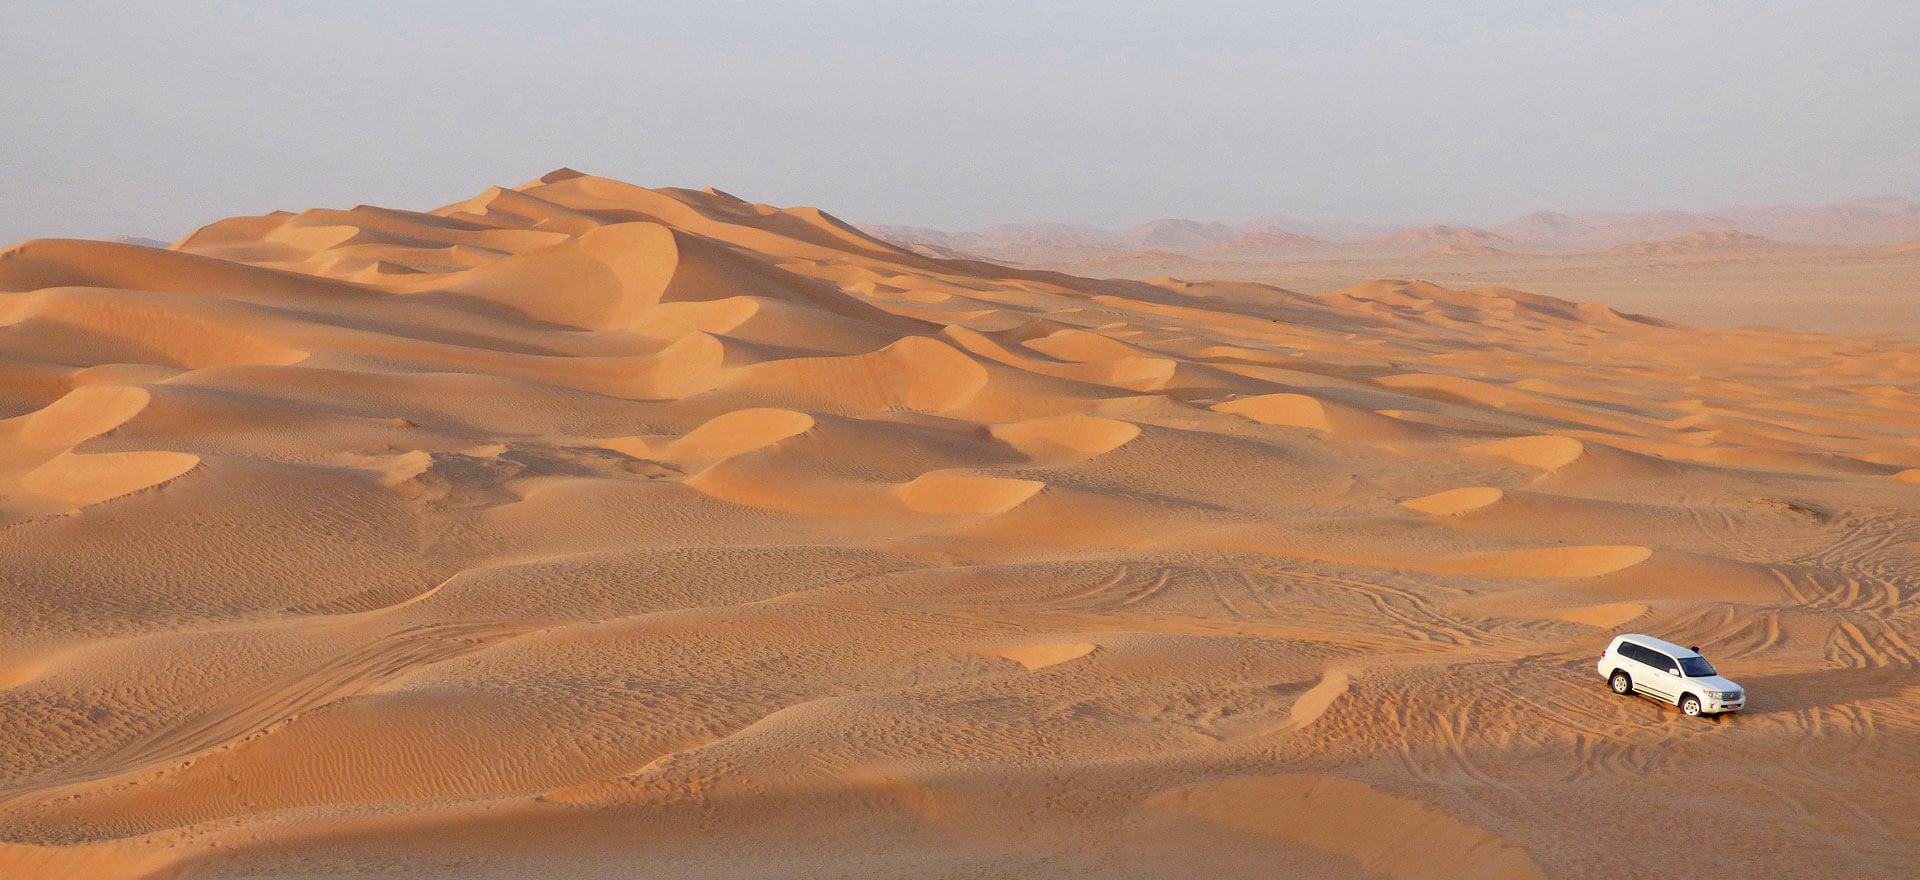 Oman holidays - Wahiba Sands